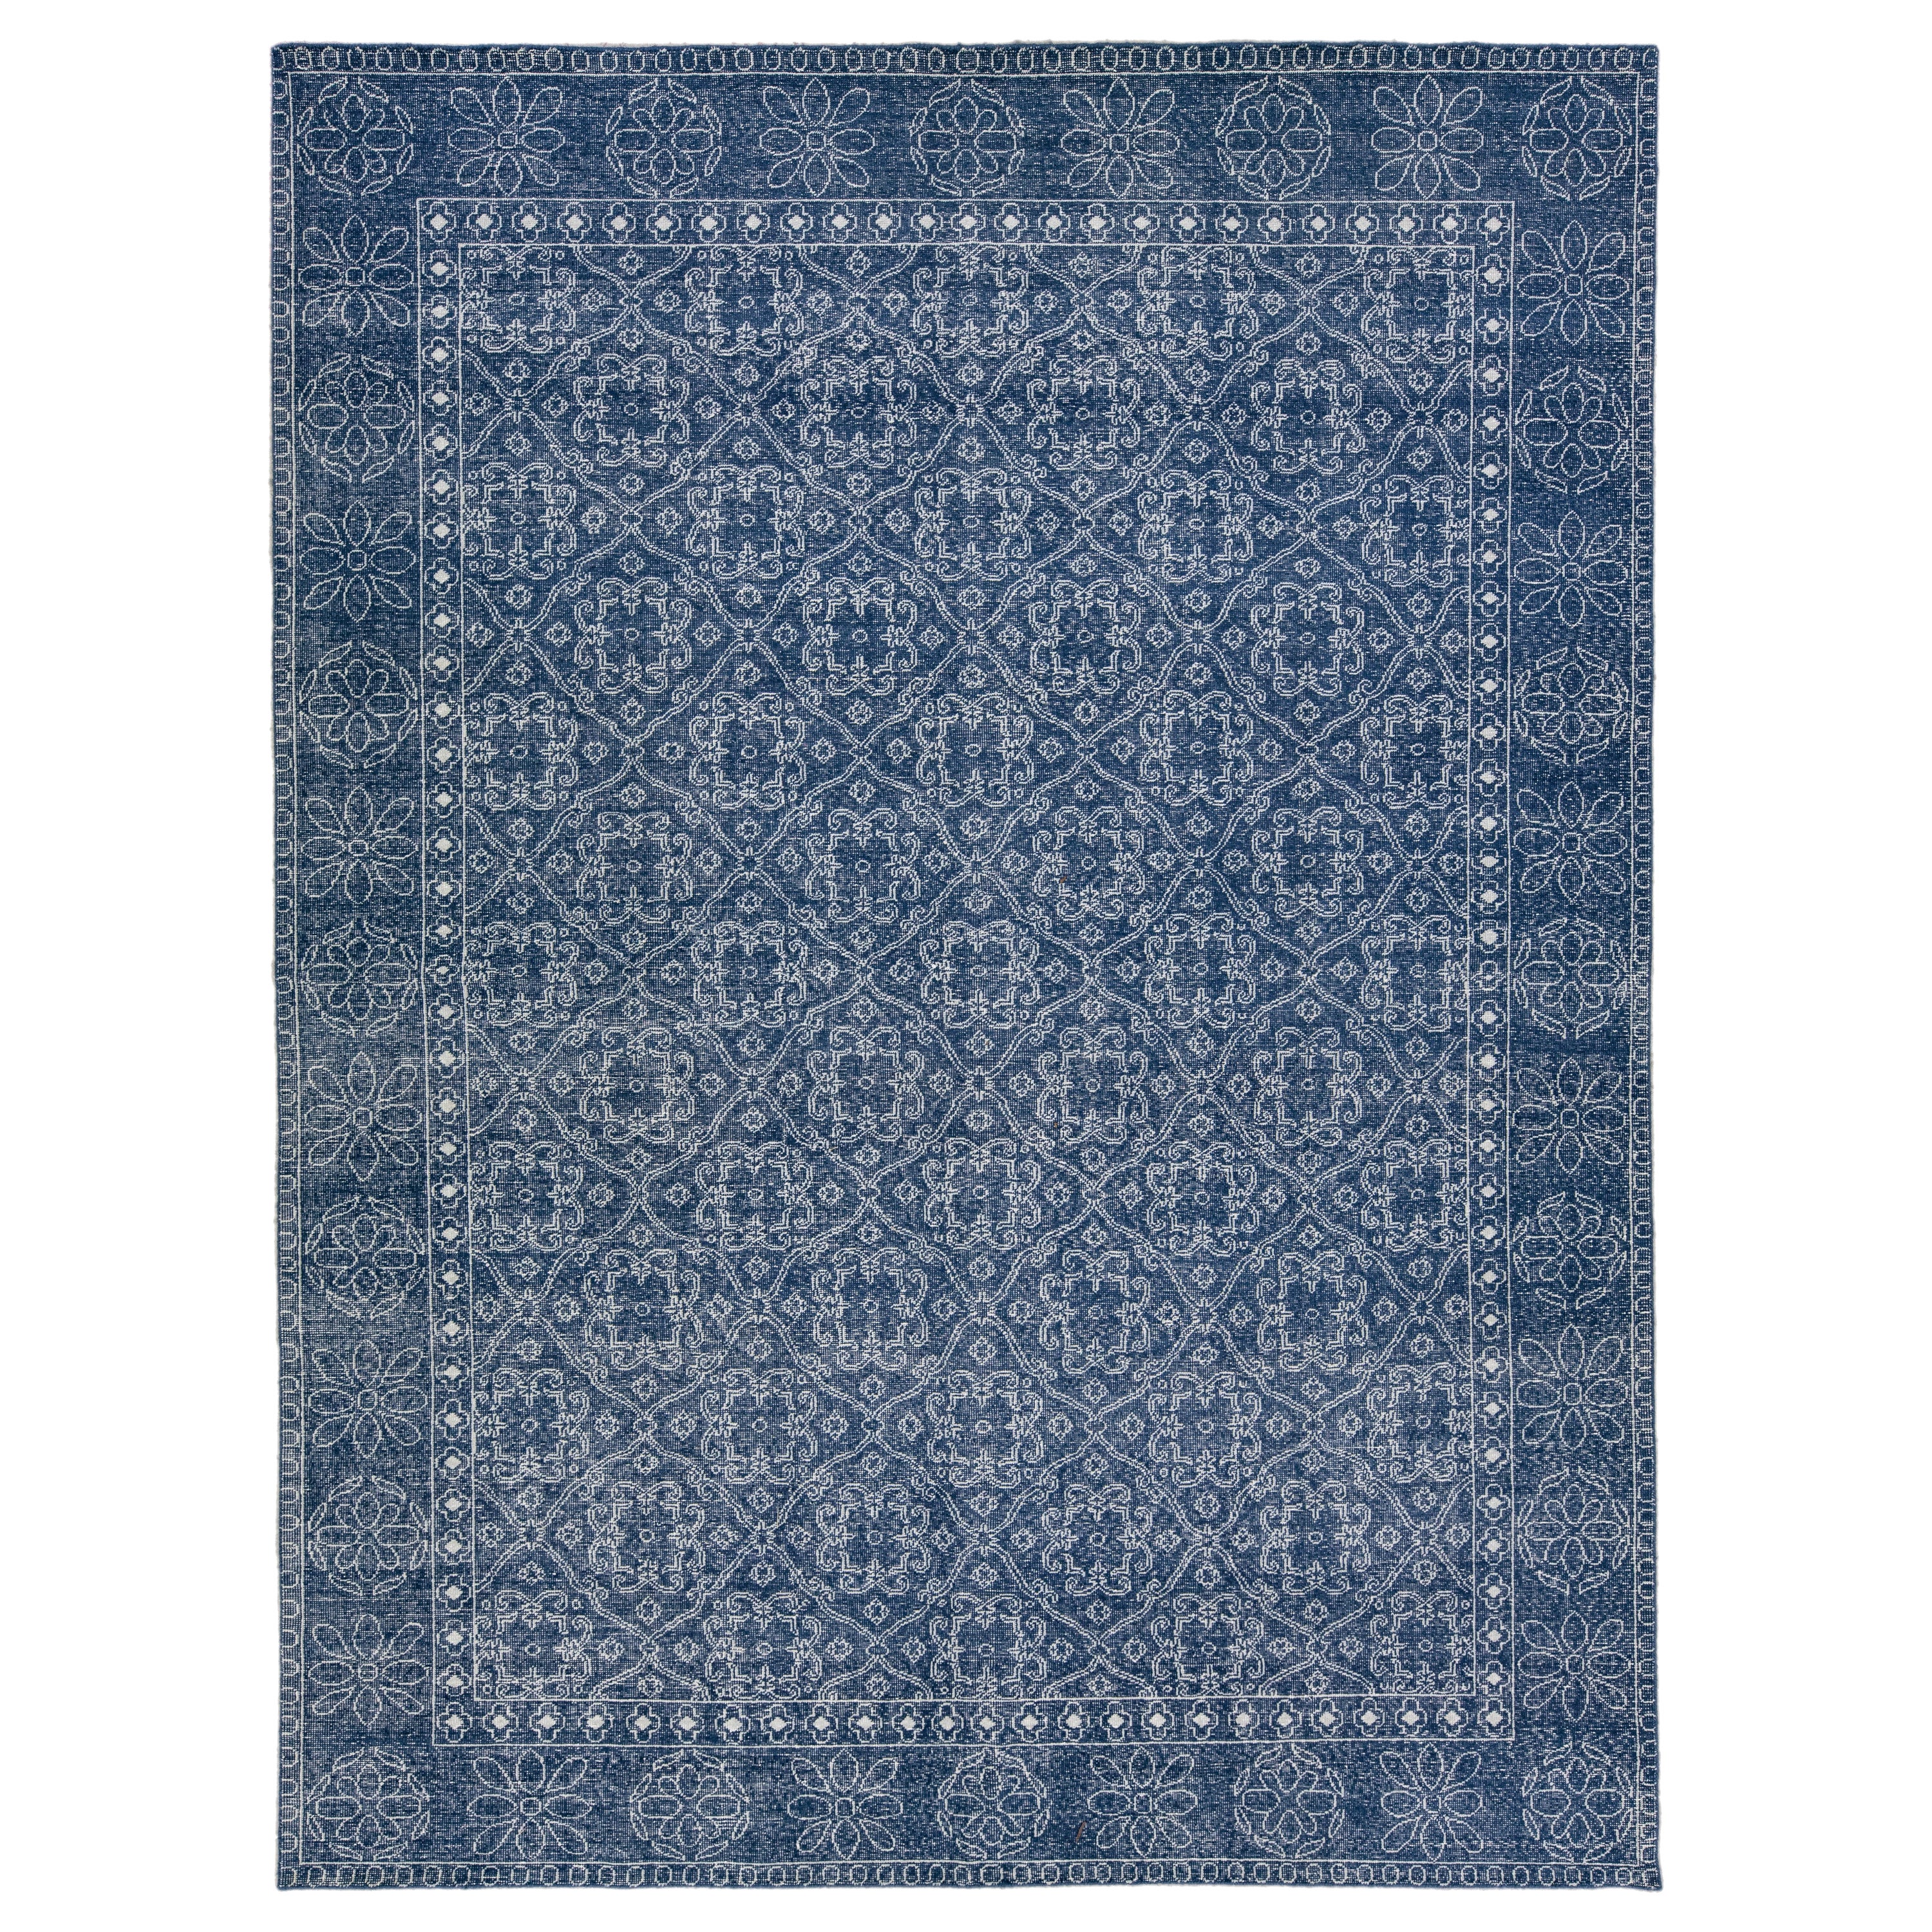 Mid-Century Modern Style Handmade Floral Trellis Motif Navy Blue Wool Rug